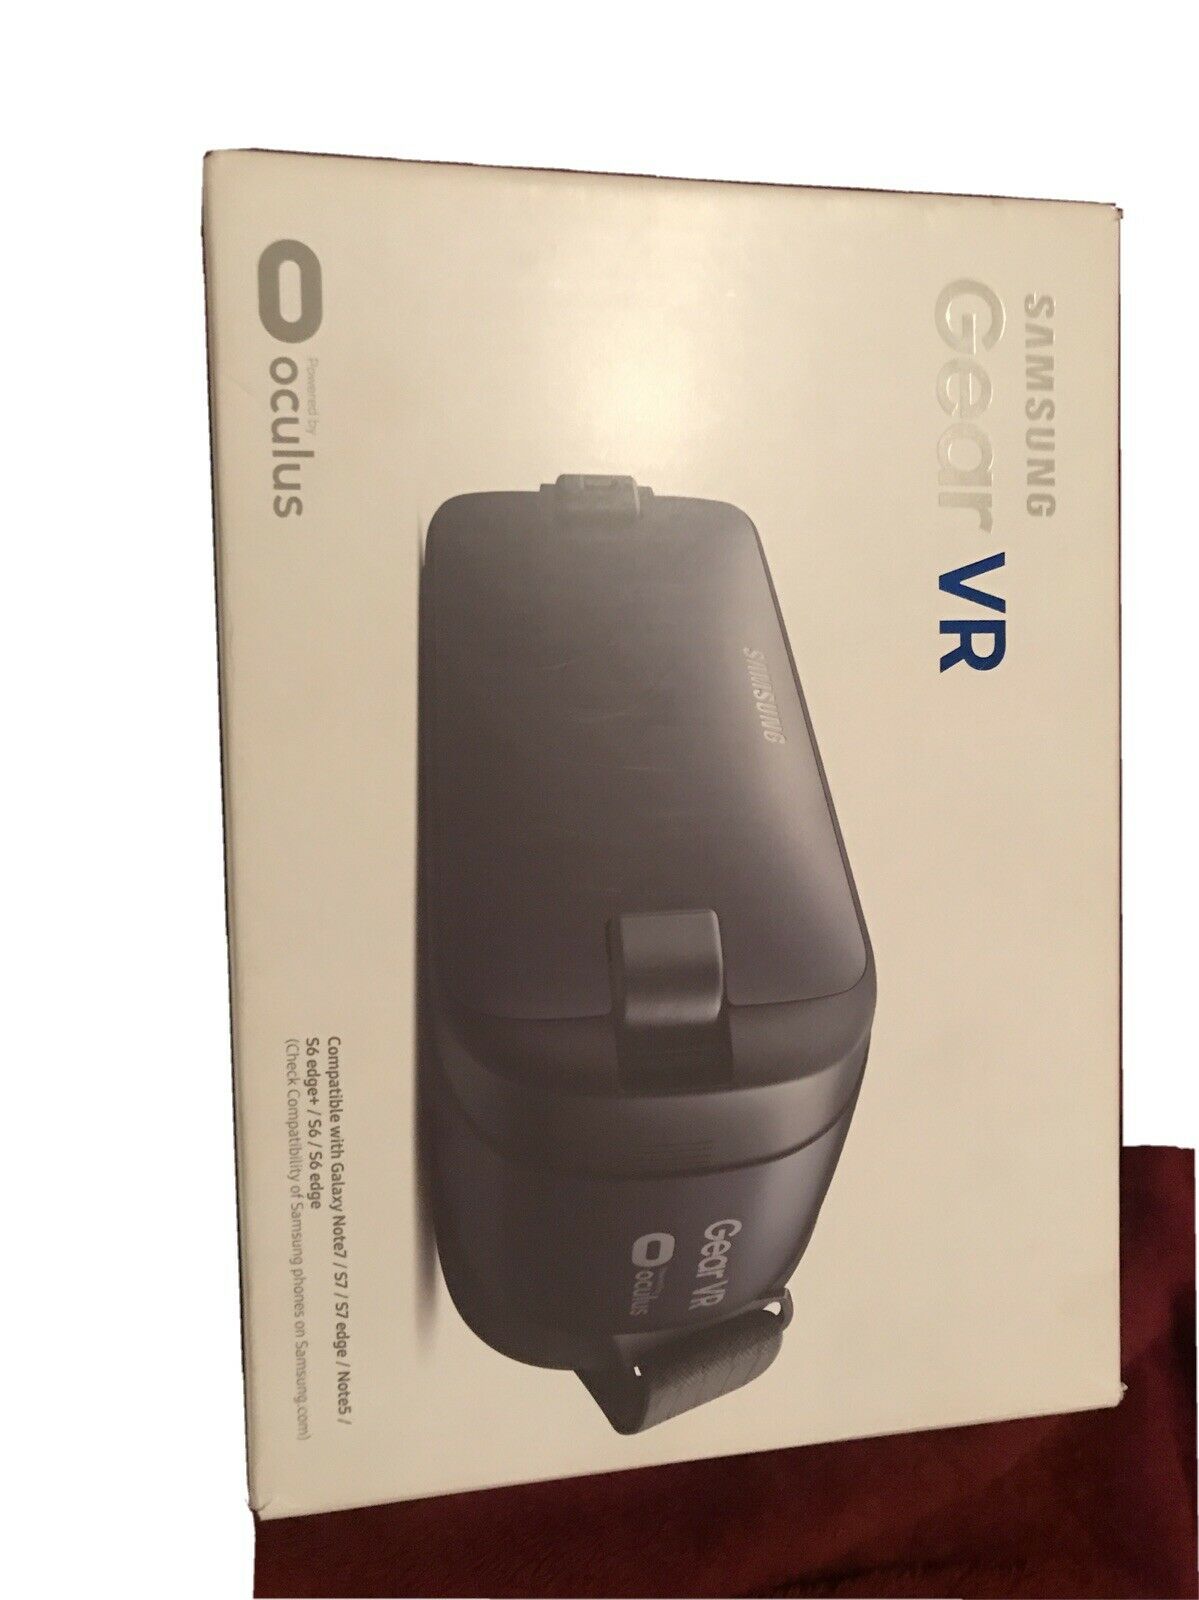 Samsung Gear Vr 2 Oculus Virtual Reality Headset Sm-r323 New